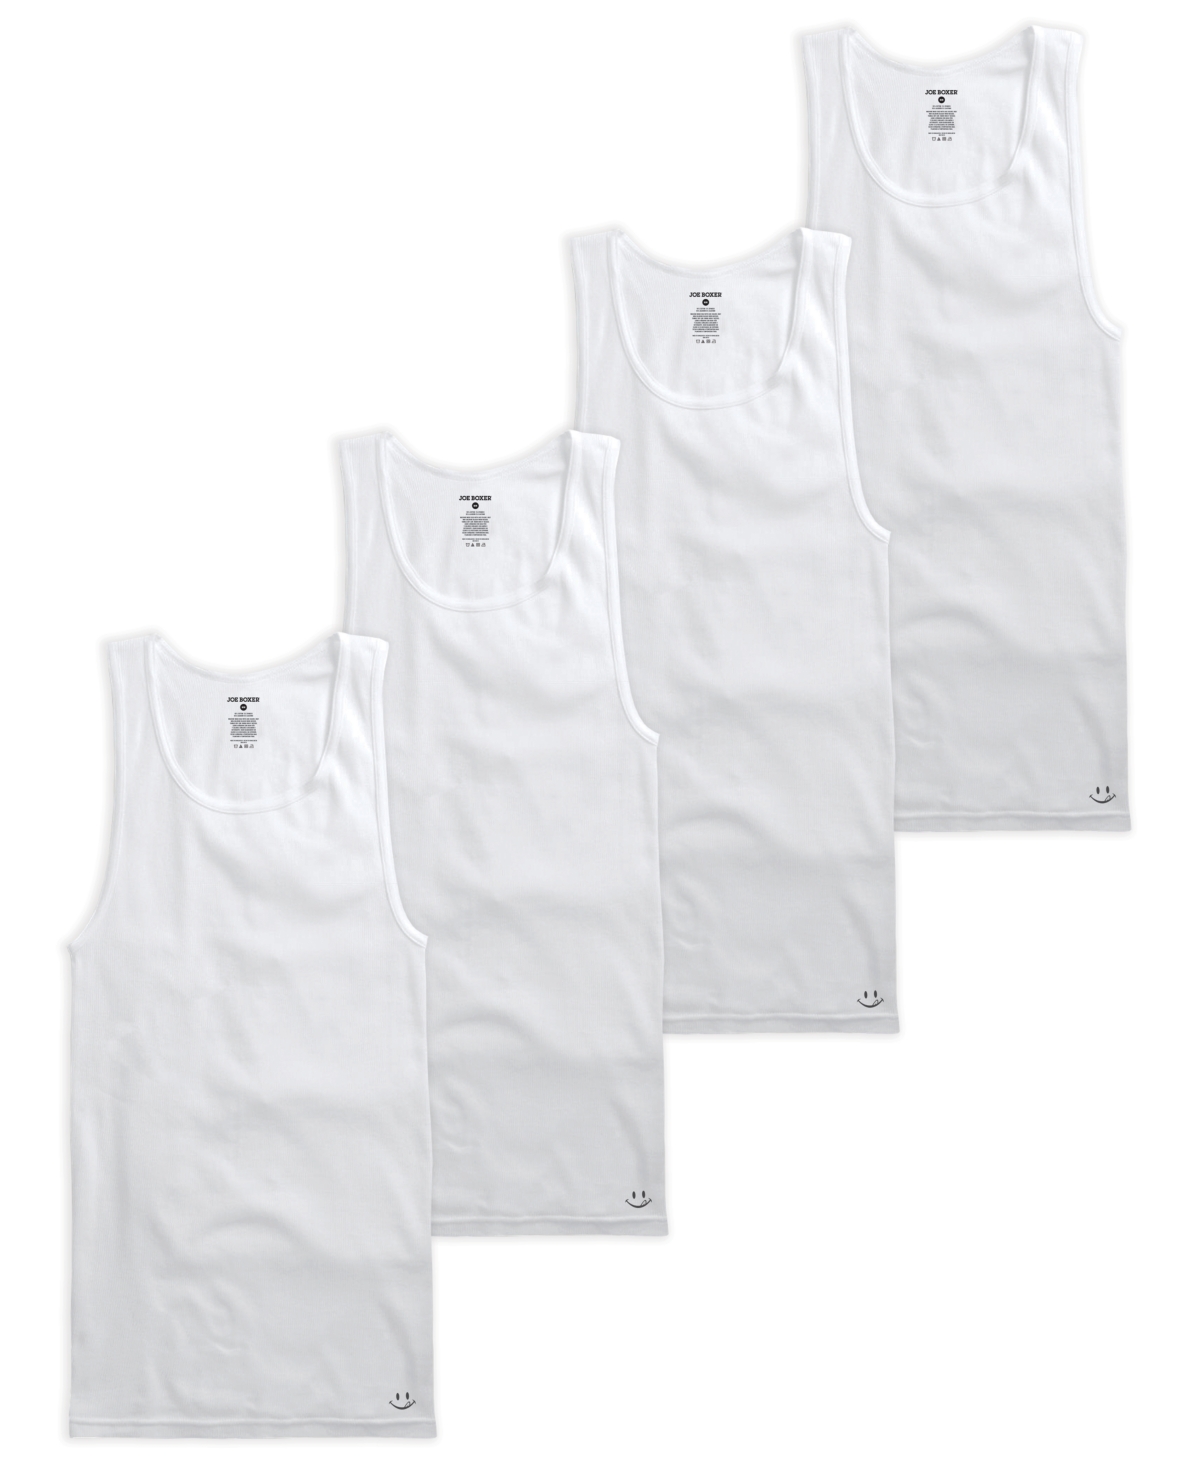 Joe Boxer Men's Tank Top A-shirt, Pack Of 4 In White